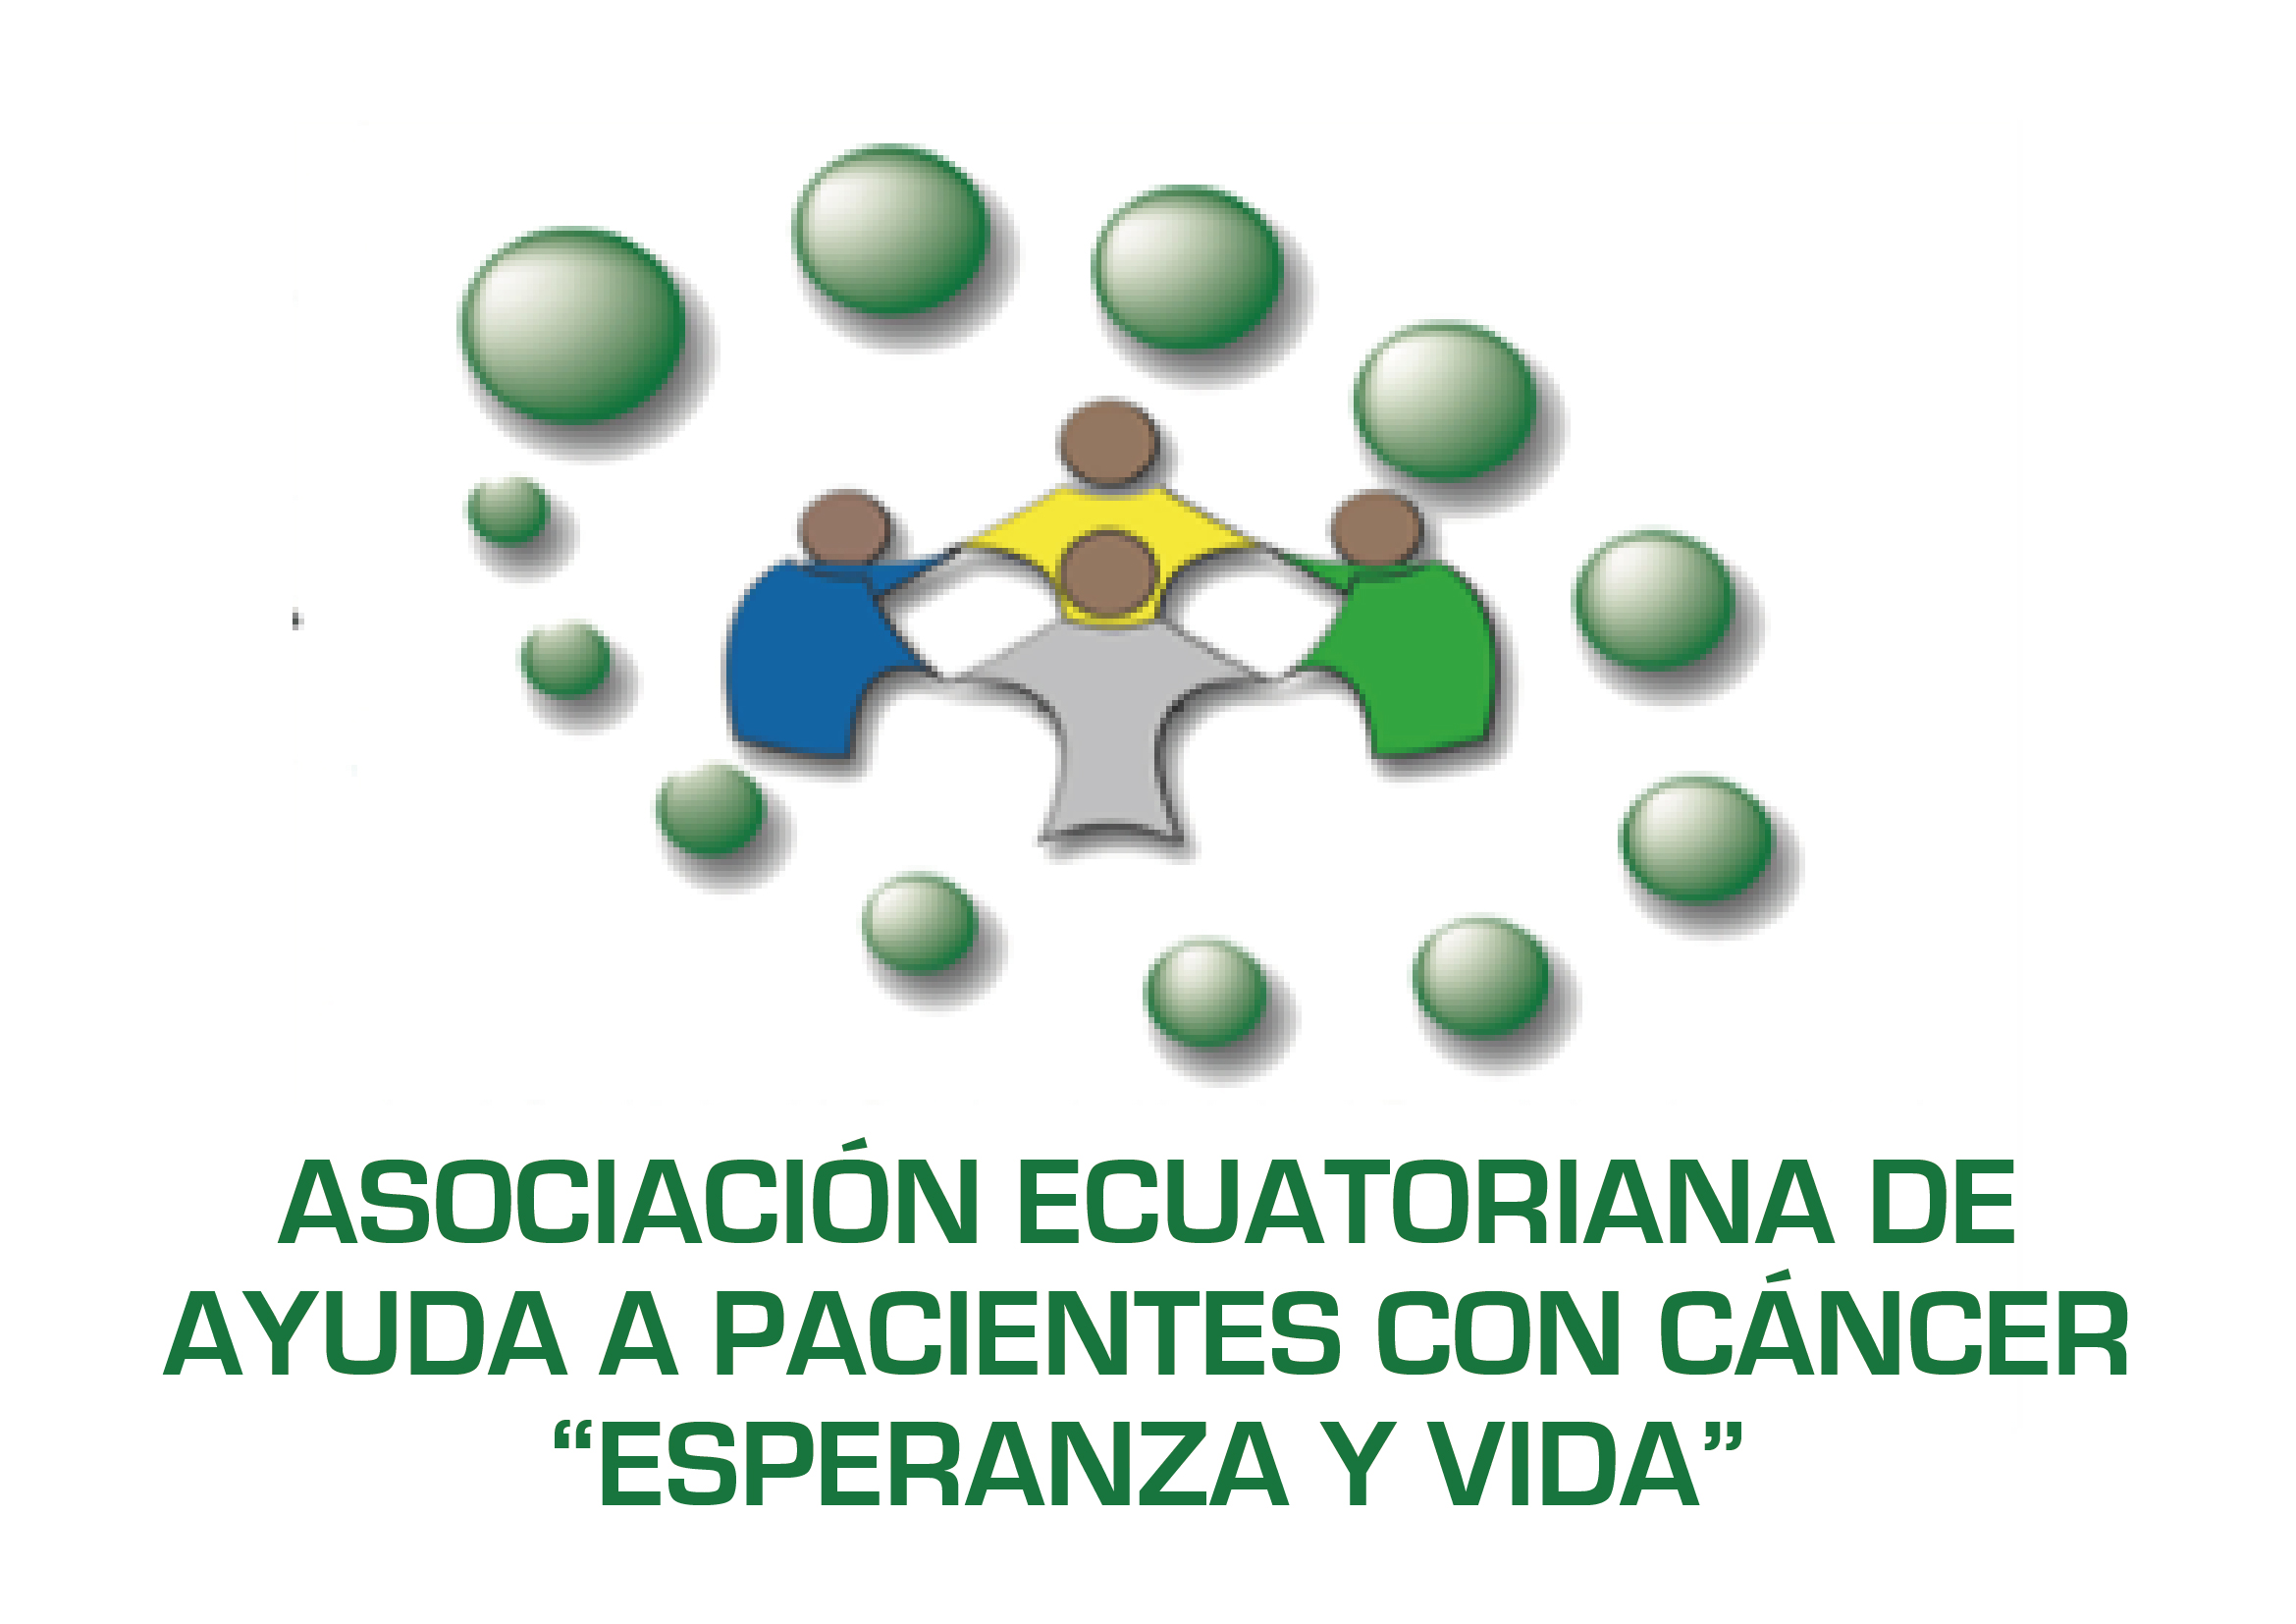 ASOCIACION ECUATORIANA DEAYUDA A PACIENTES CON CANCER ESPERANZA Y VIDA